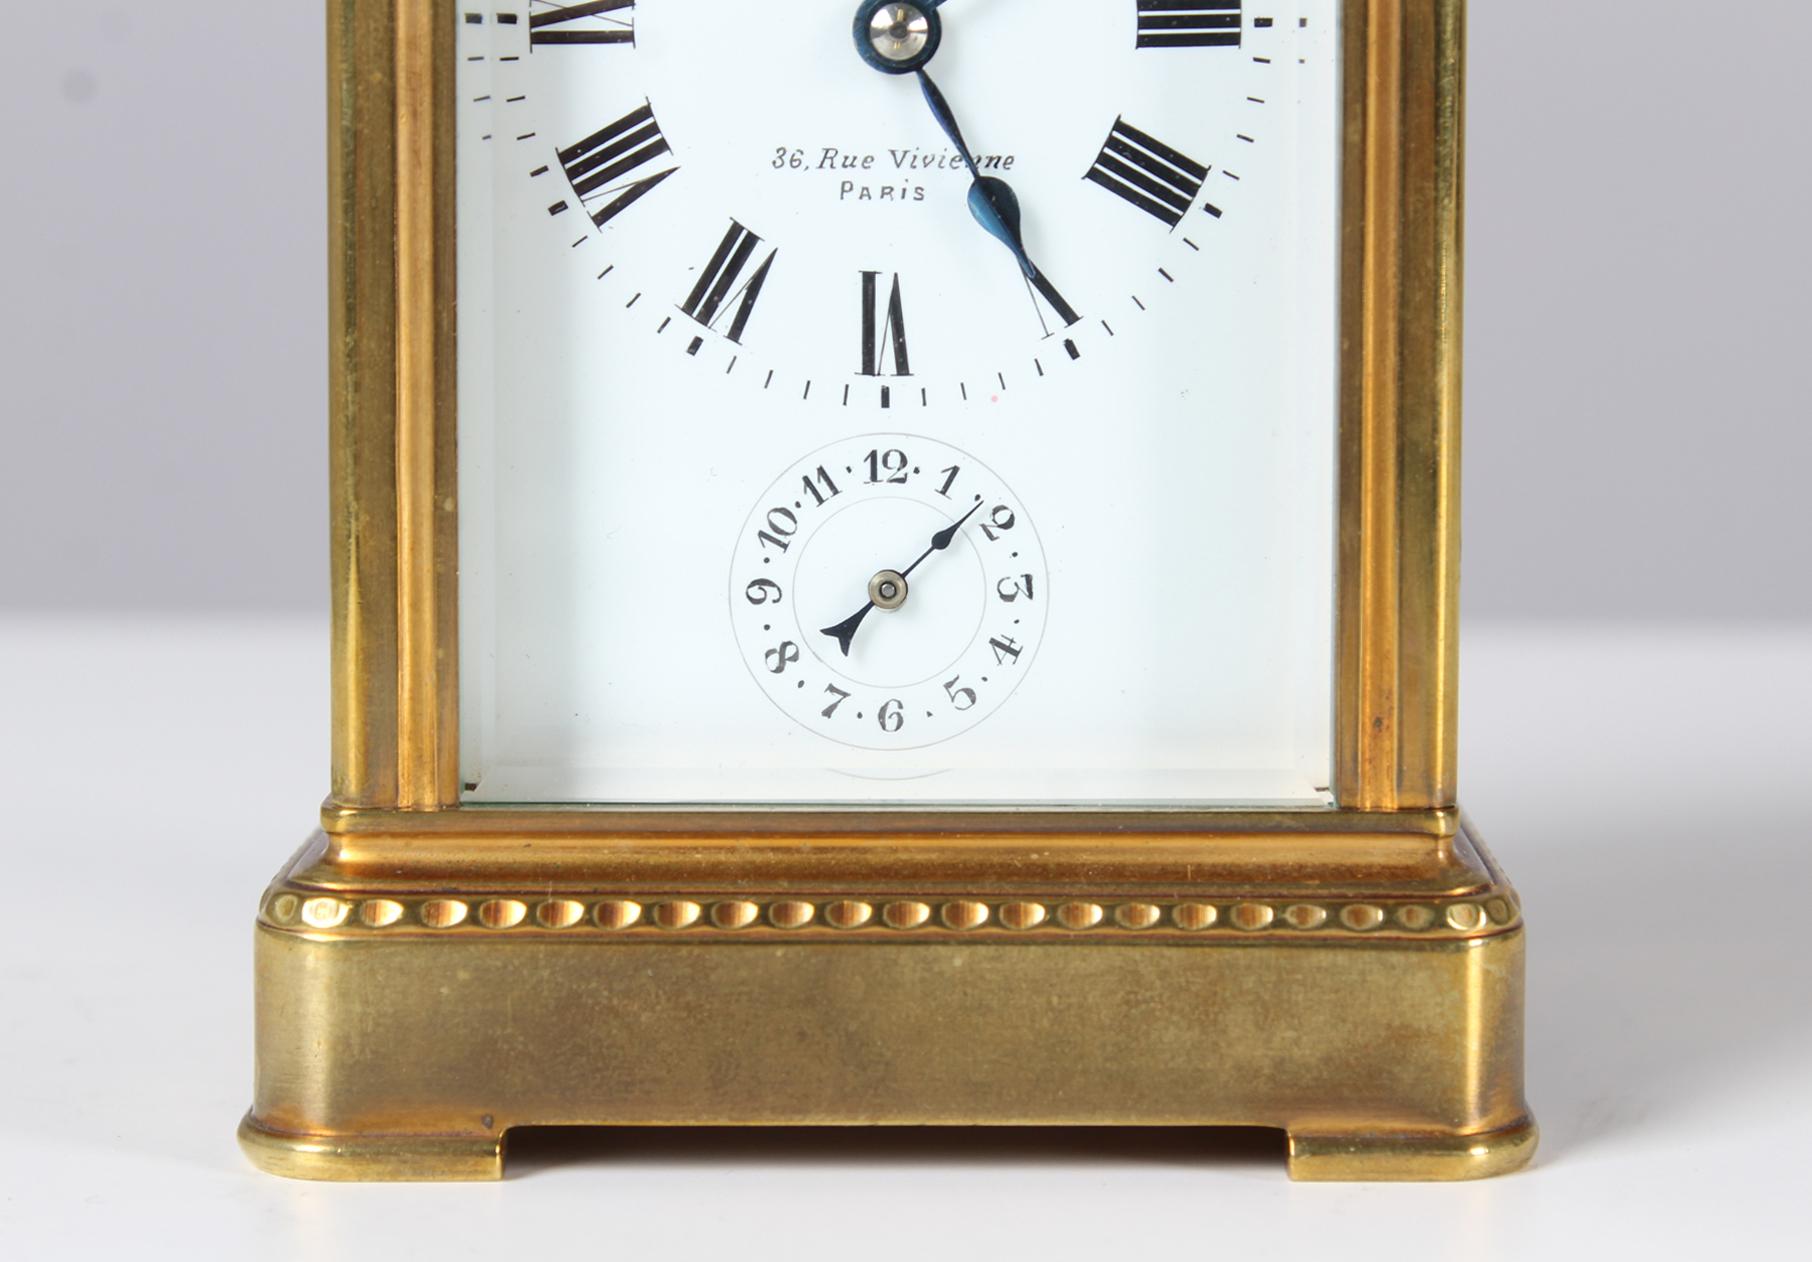 Brass 19th Century French Travel Alarm Clock, Signature A.H. Rodanet Paris, circa 1880